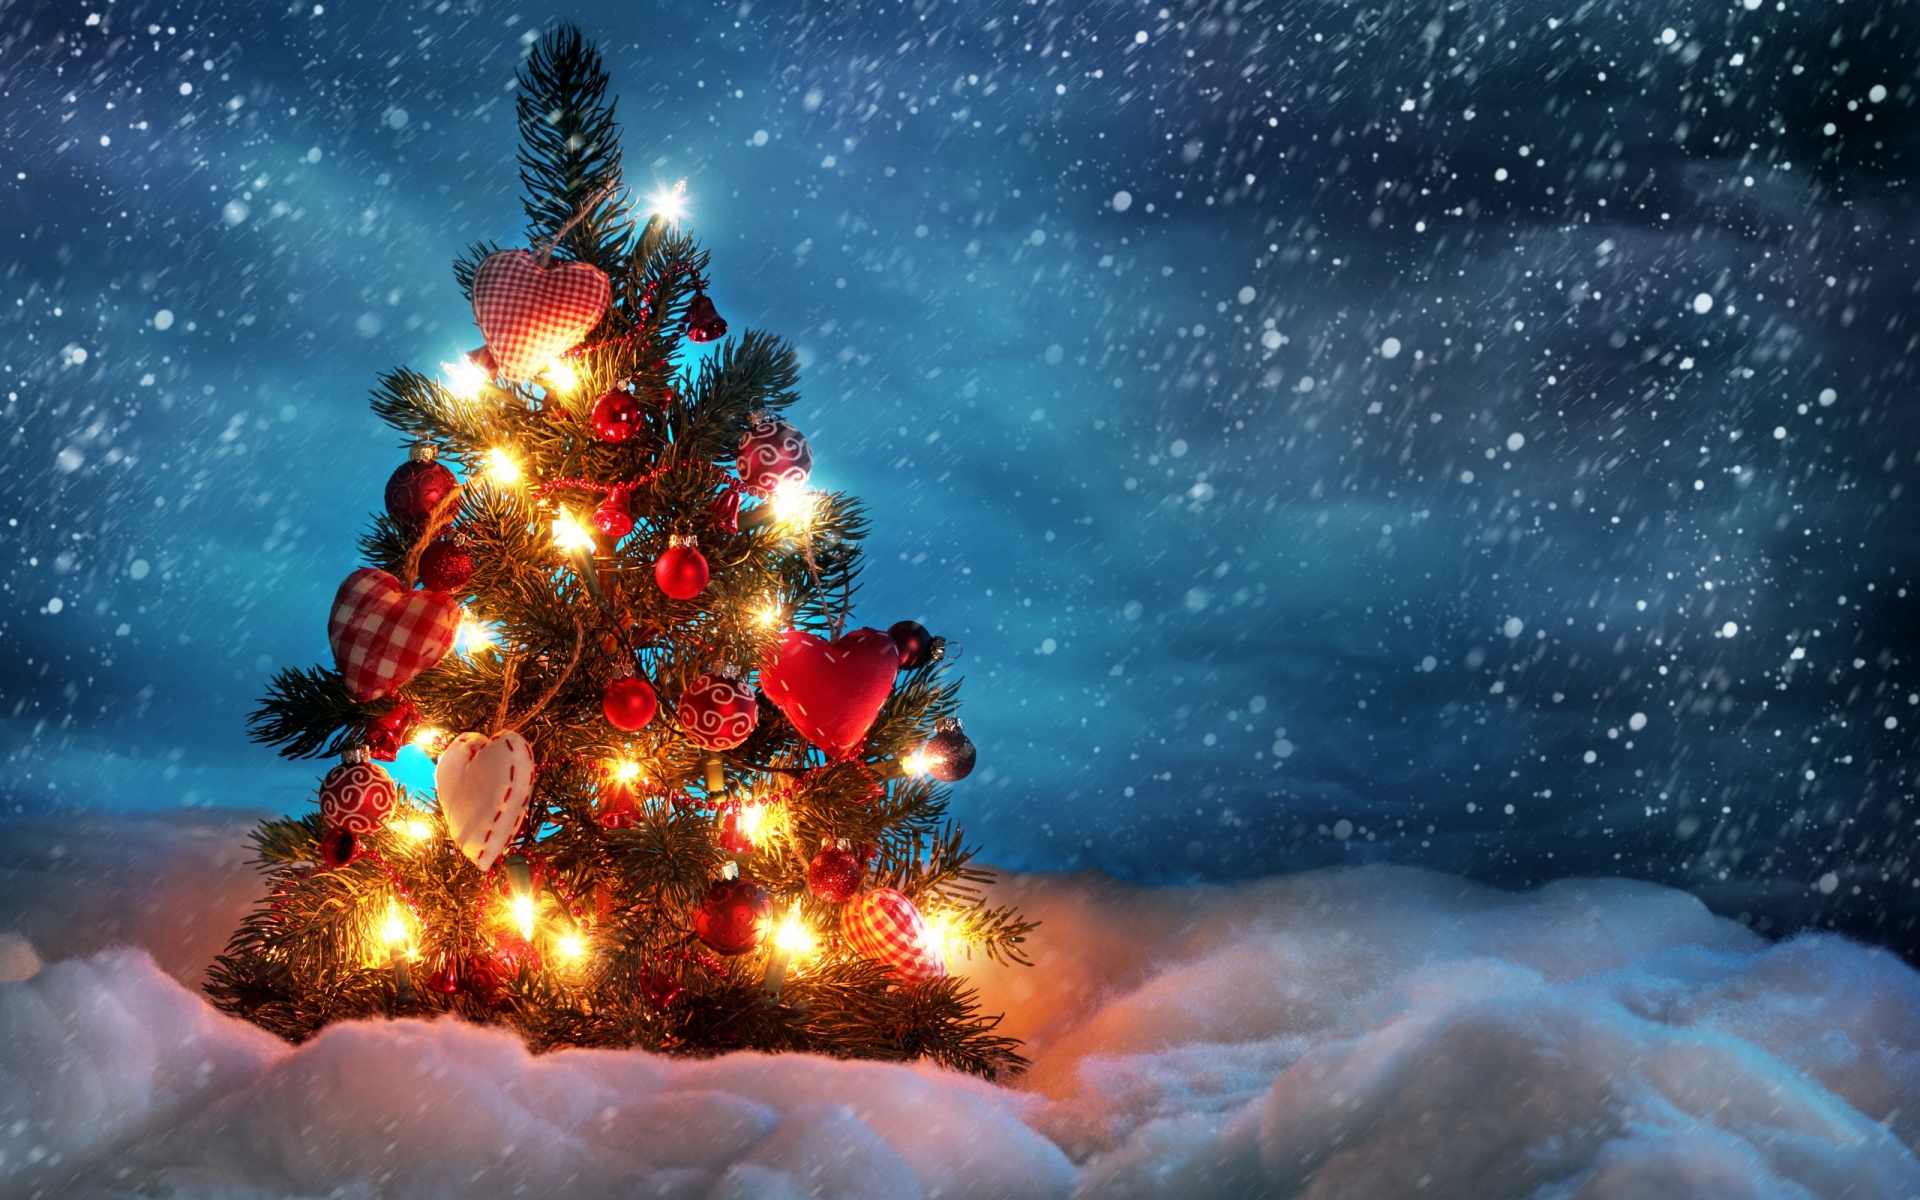 Cute Christmas Tree Puter Desktop Wallpaper Pictures Image